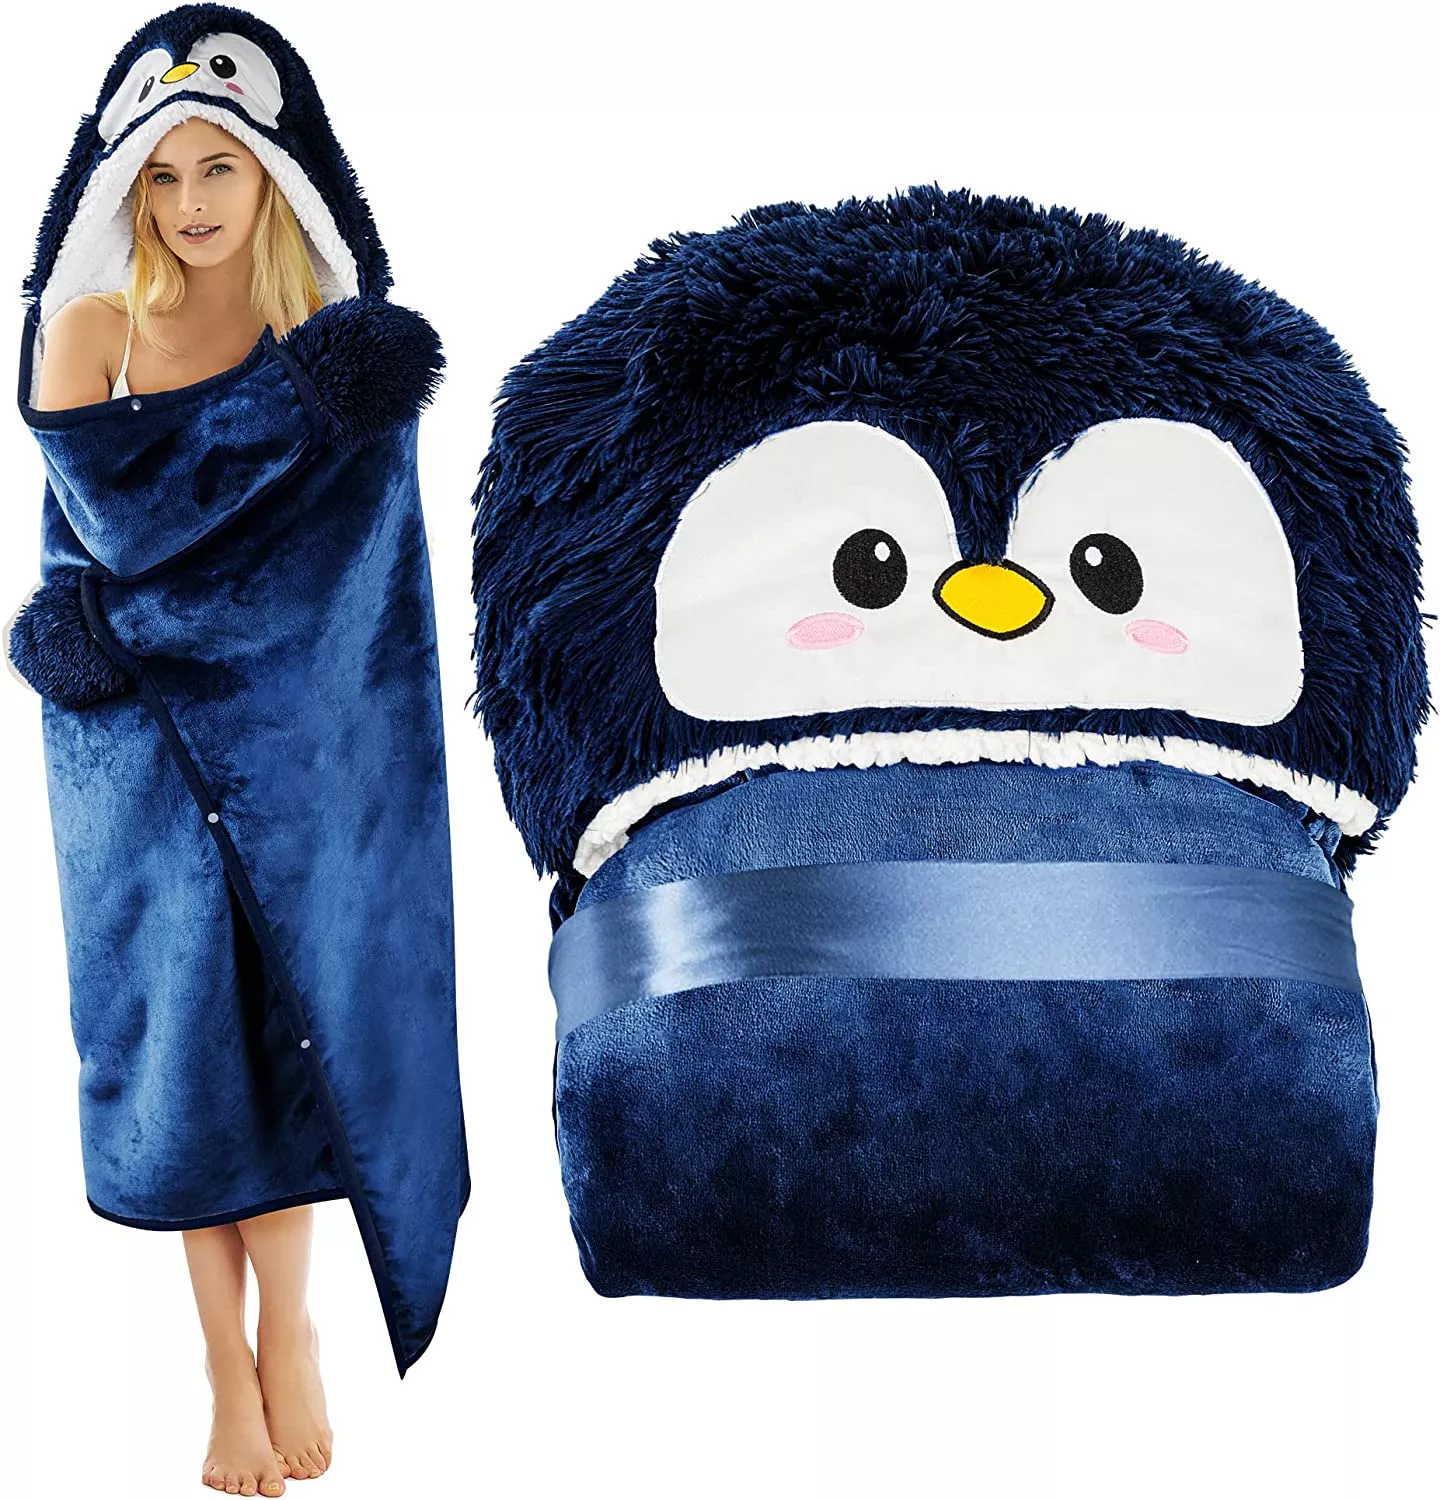 Penguin Wearable Adult Hooded Blanket - Super Soft Warm Cozy Plush Flannel Fleece